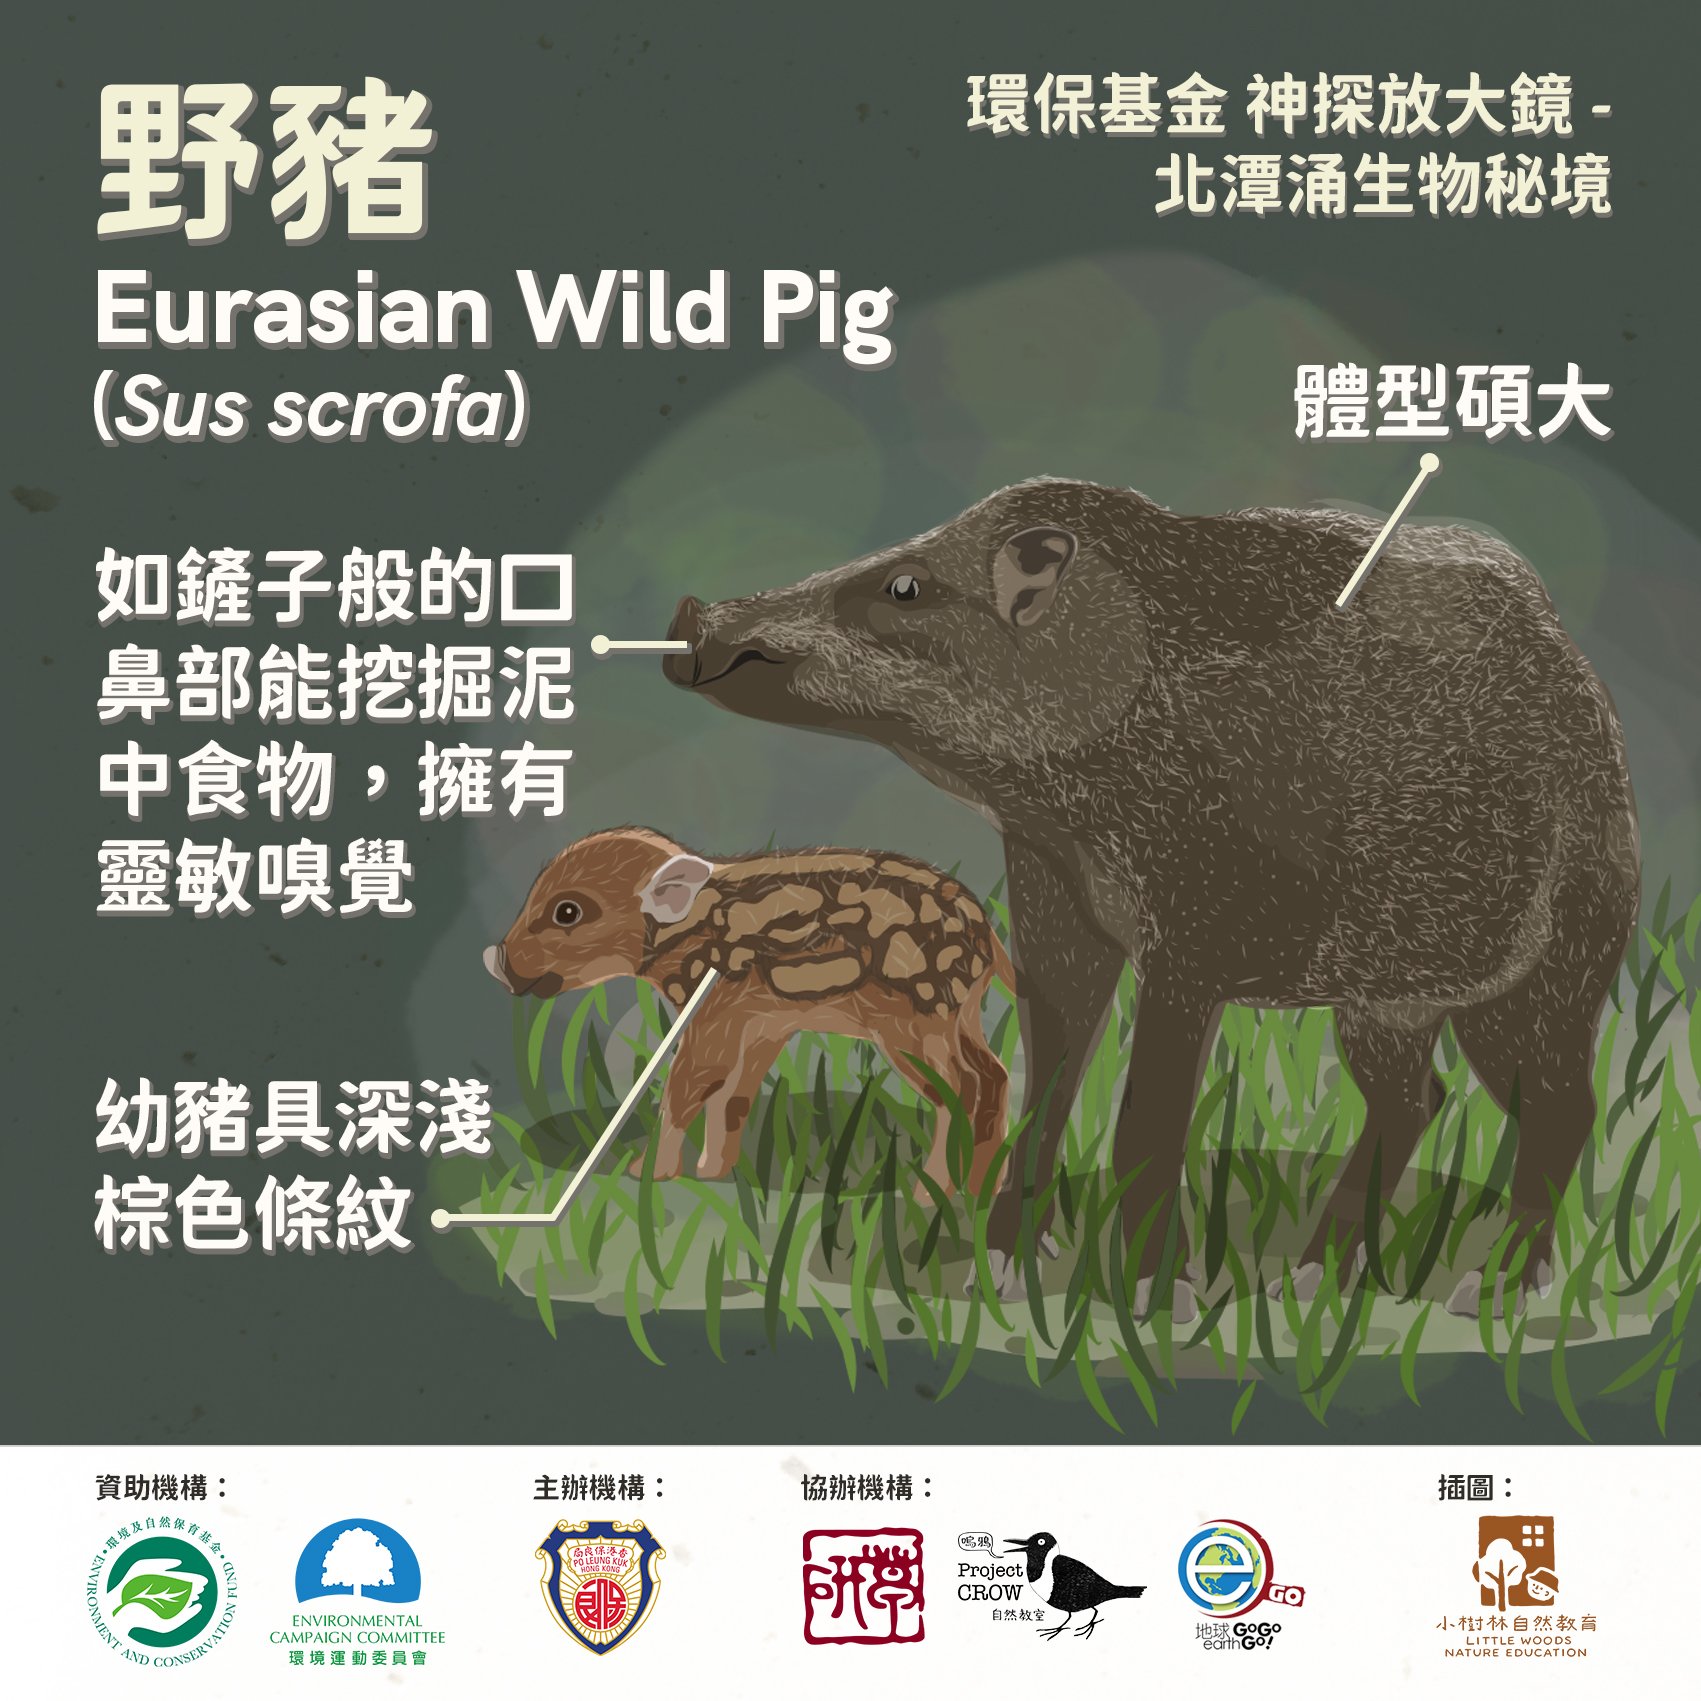 Euraians Wild Pig